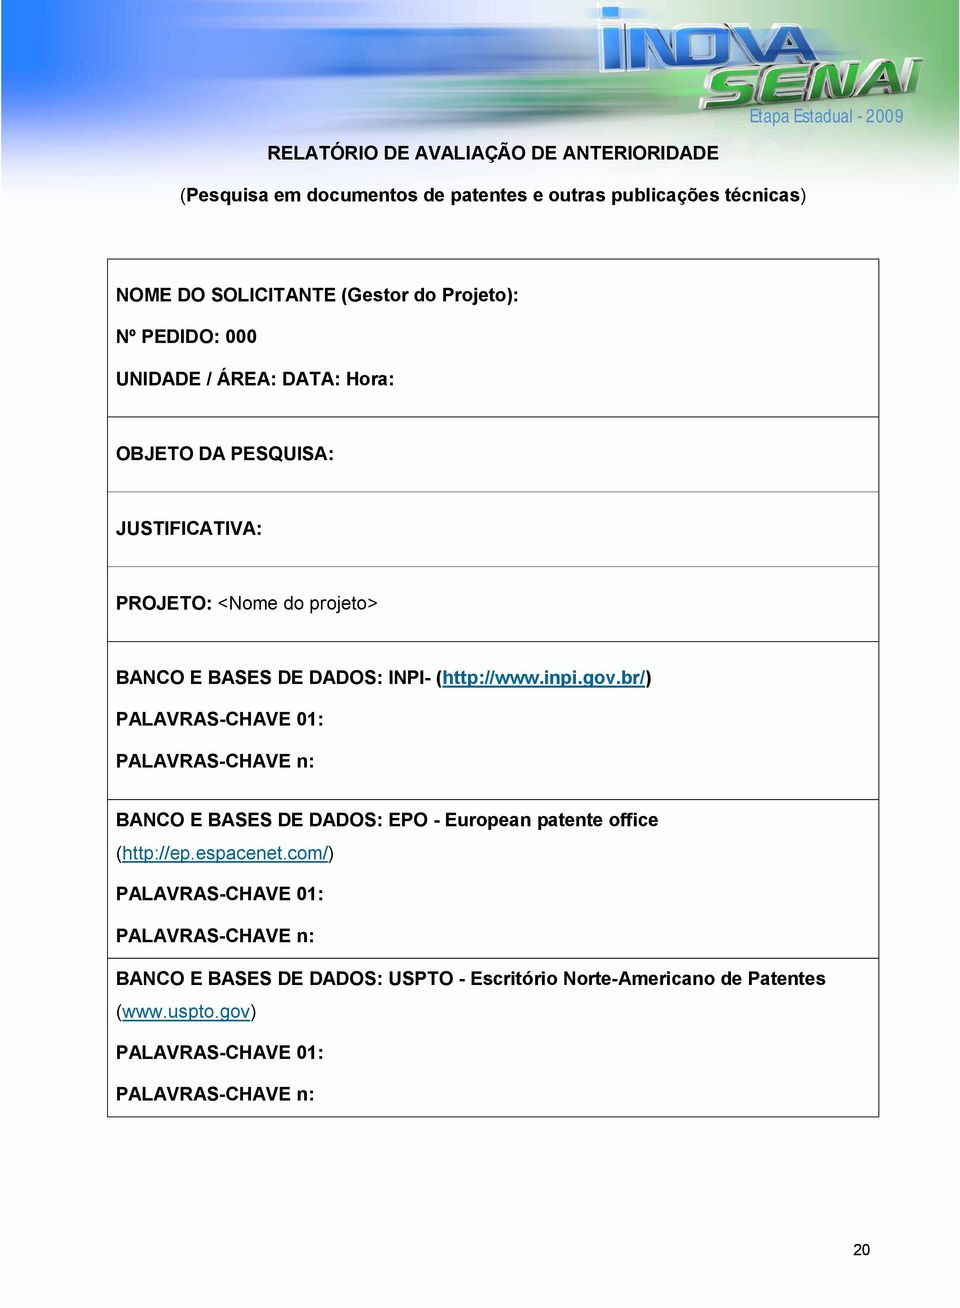 inpi.gov.br/) PALAVRAS-CHAVE 01: PALAVRAS-CHAVE n: BANCO E BASES DE DADOS: EPO - European patente office (http://ep.espacenet.